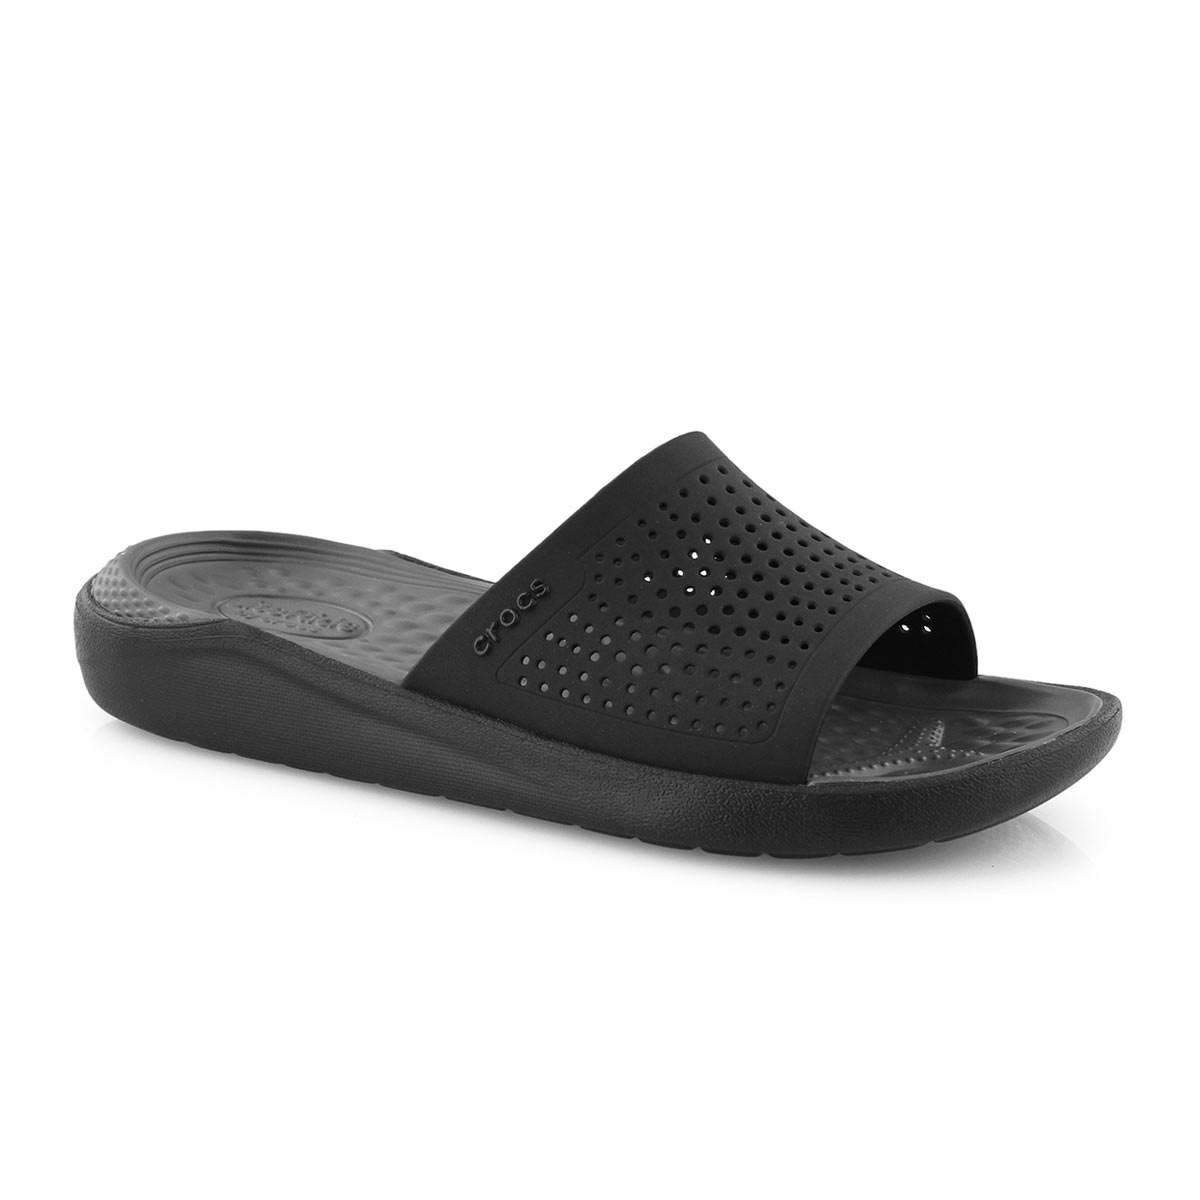 Crocs Men's LiteRide Slide Sandal - Black/Sla | SoftMoc.com